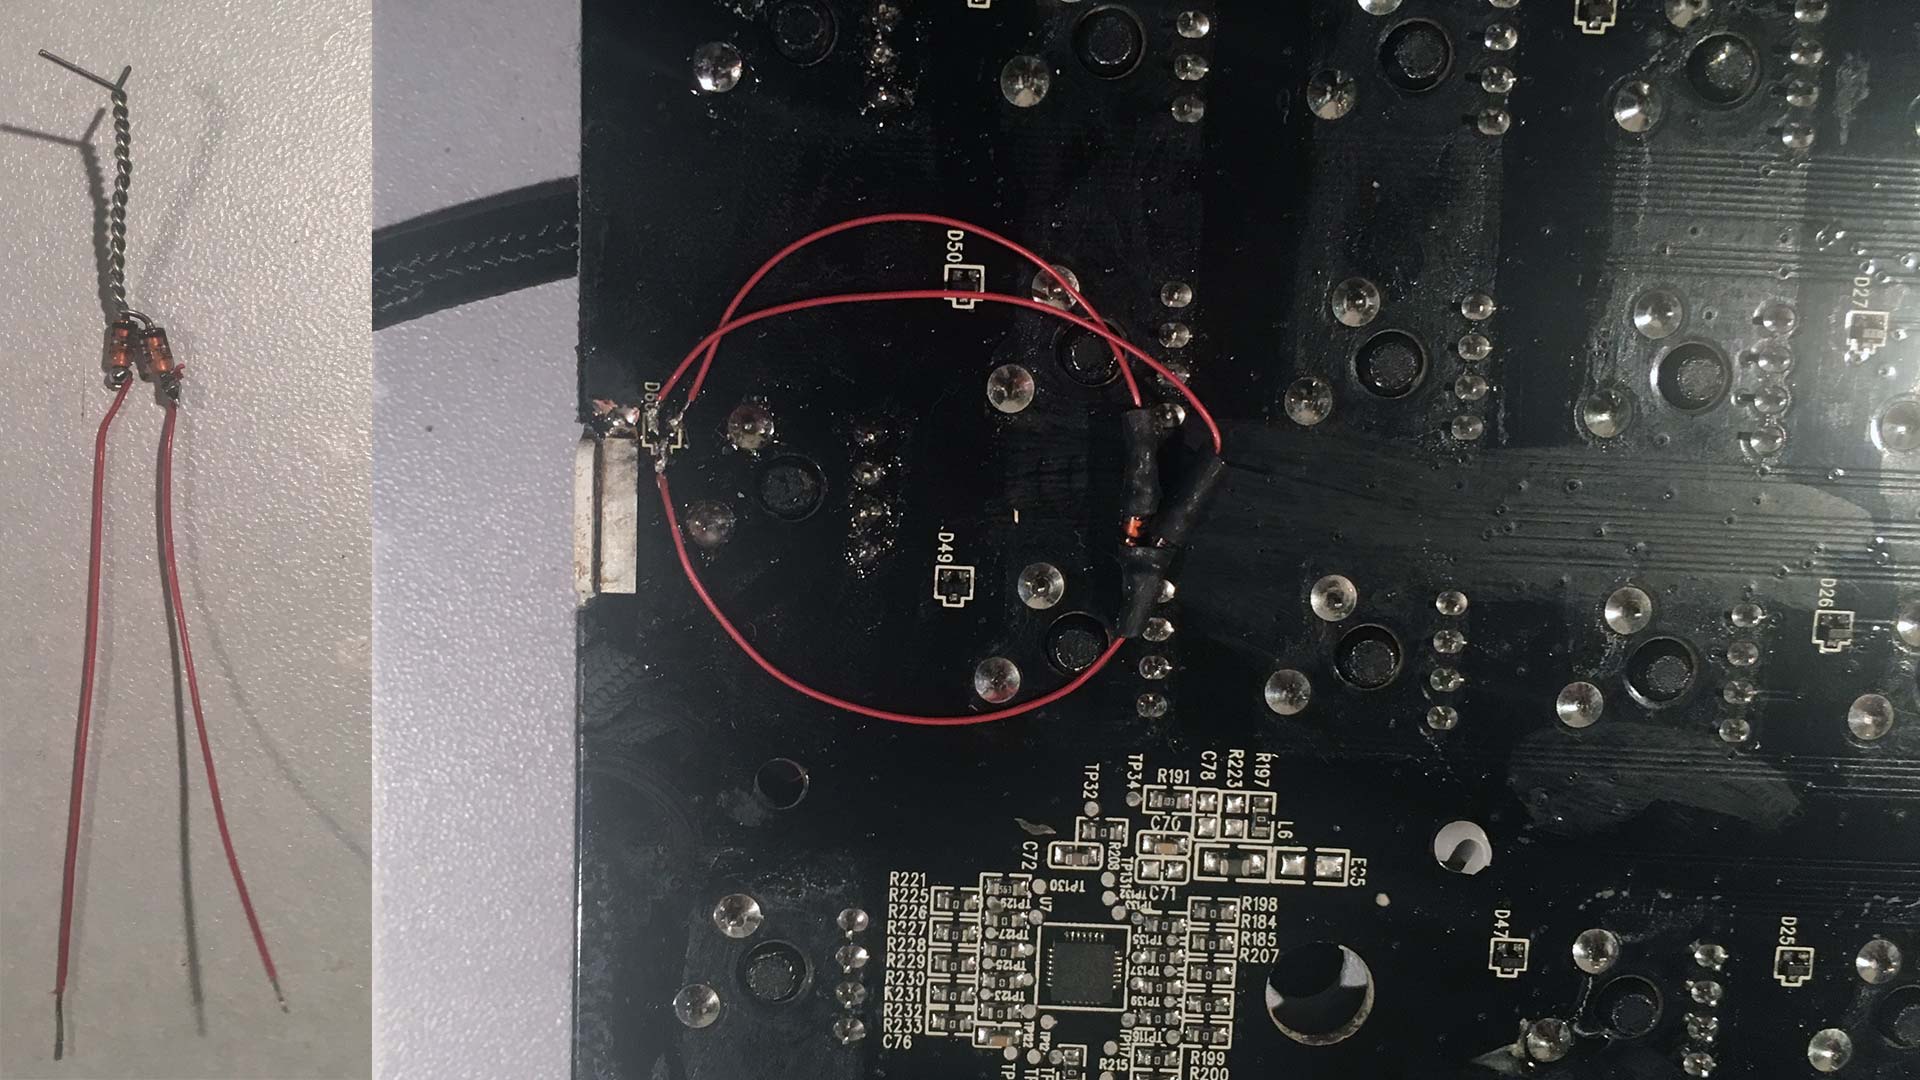 Razer Blackwidow 2014 disassembly - hack diodes!